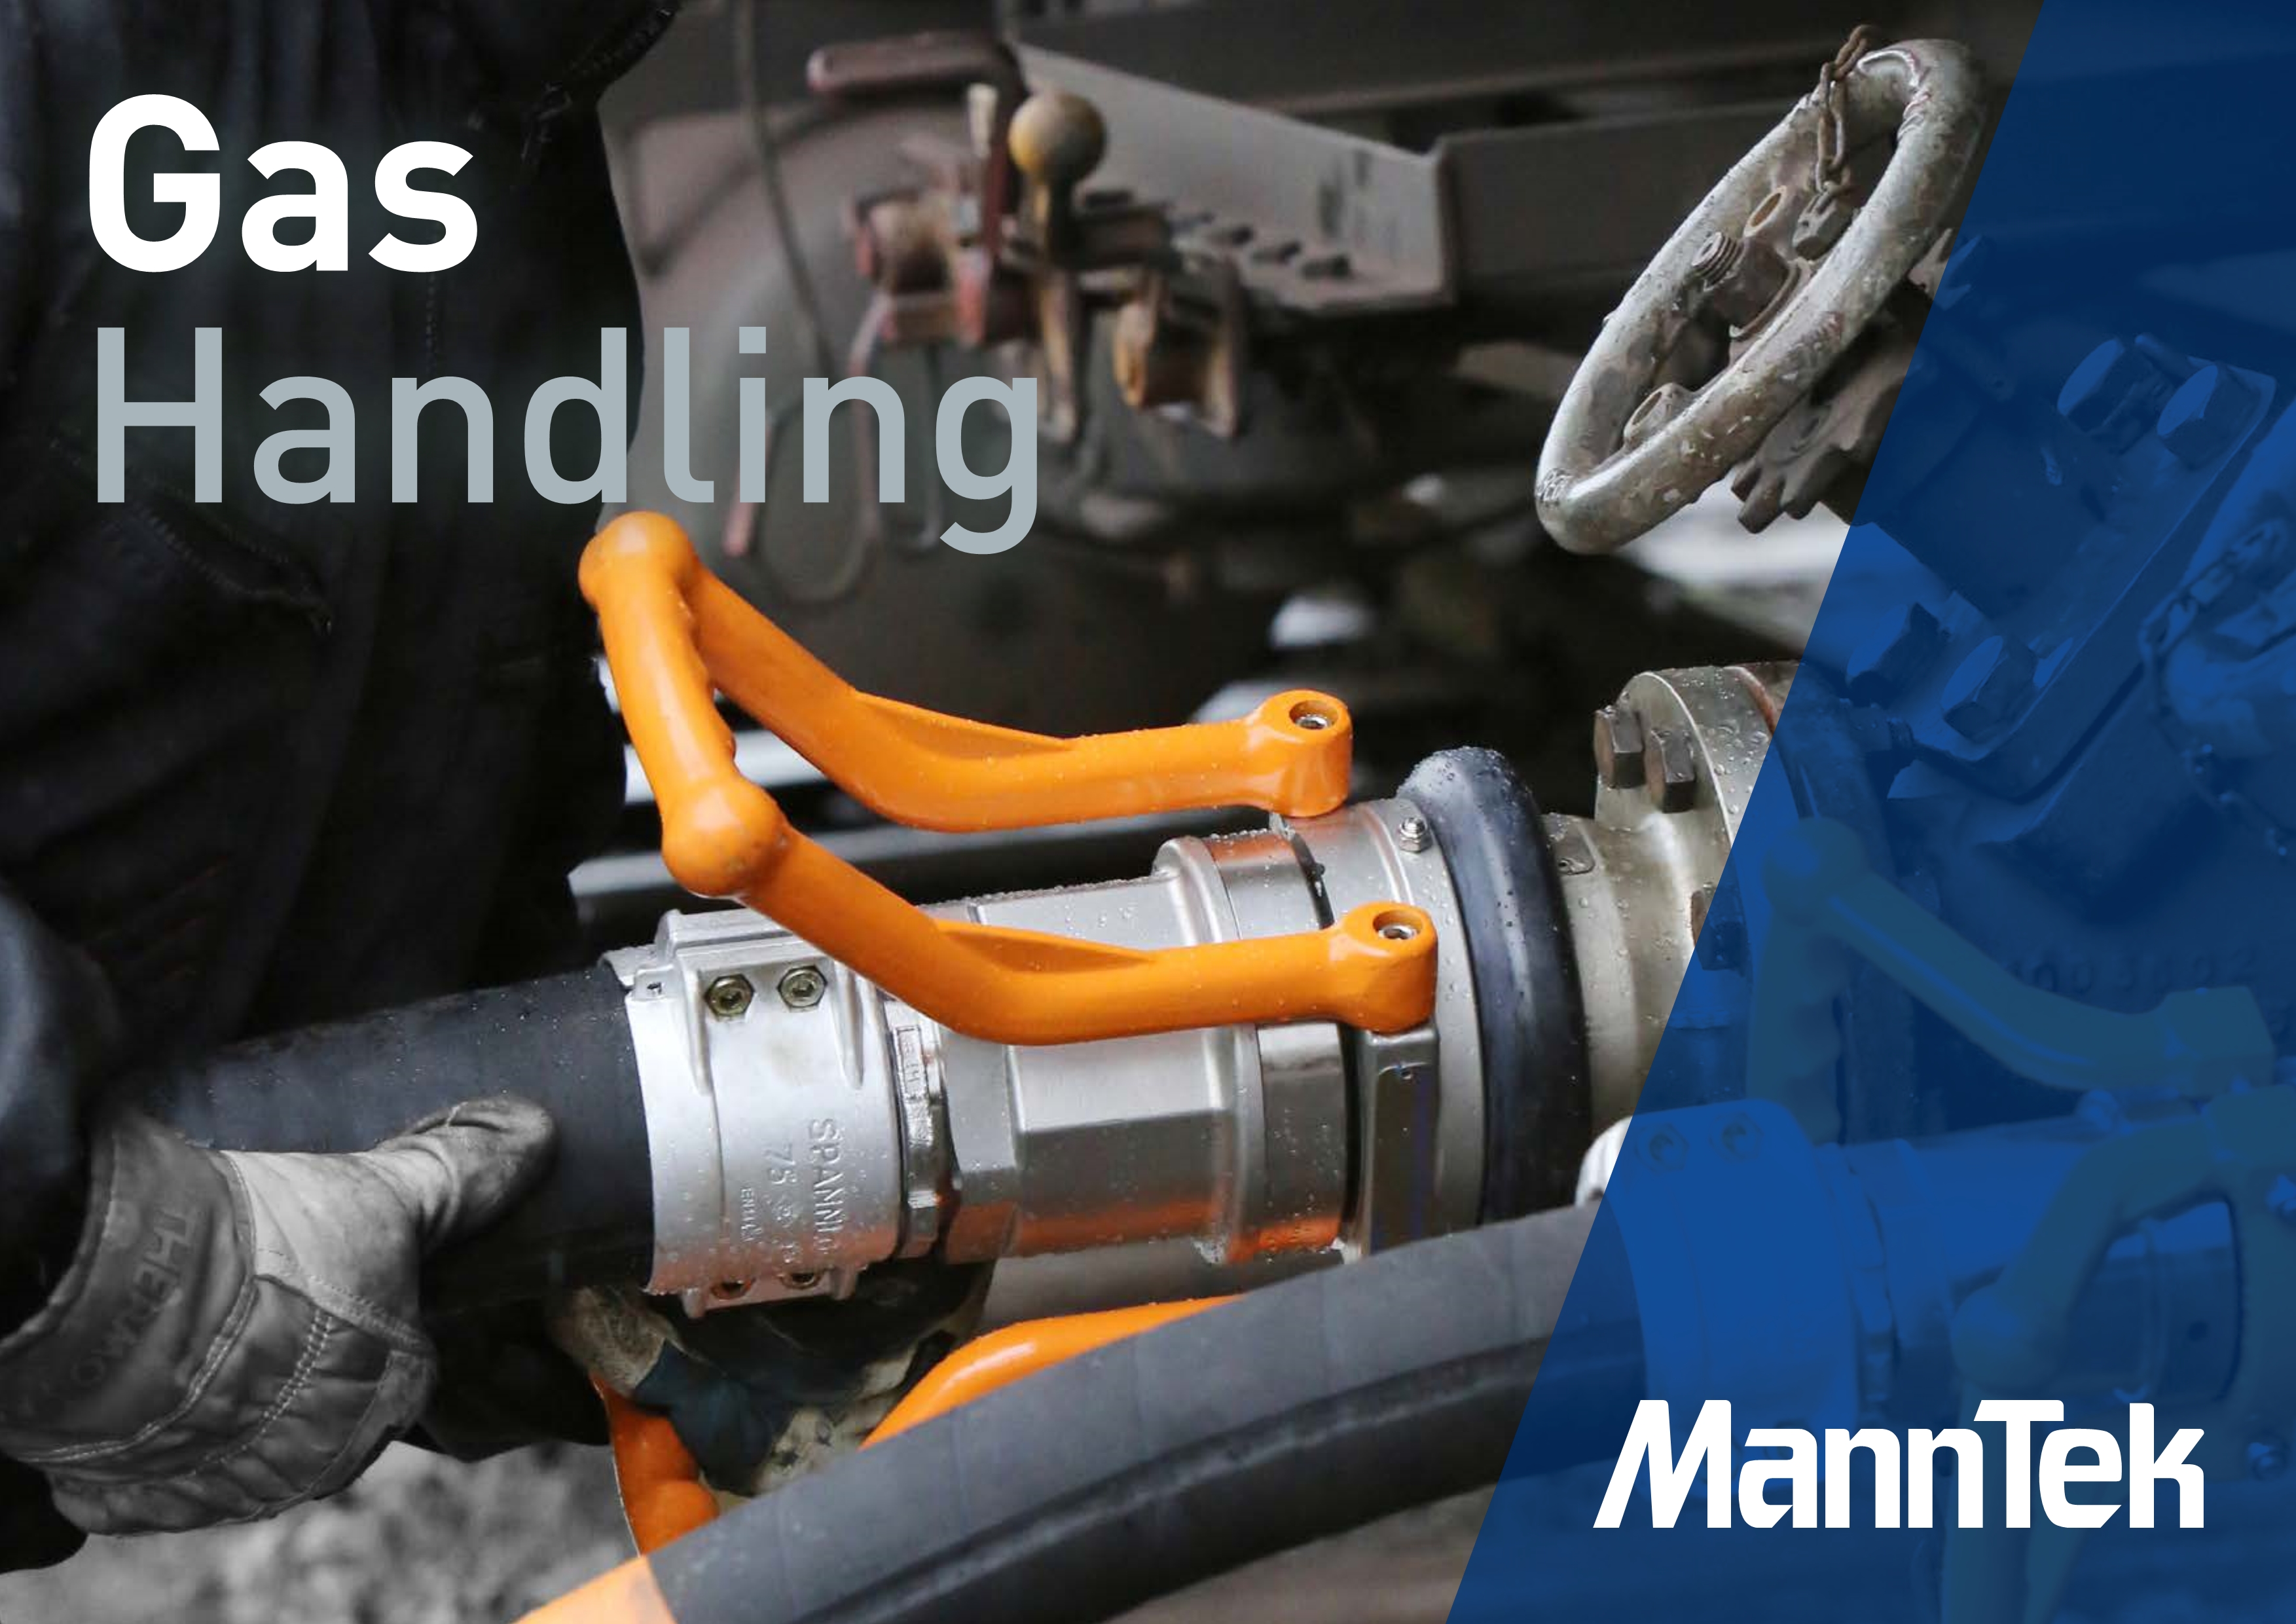 Manntek - Gas Handling